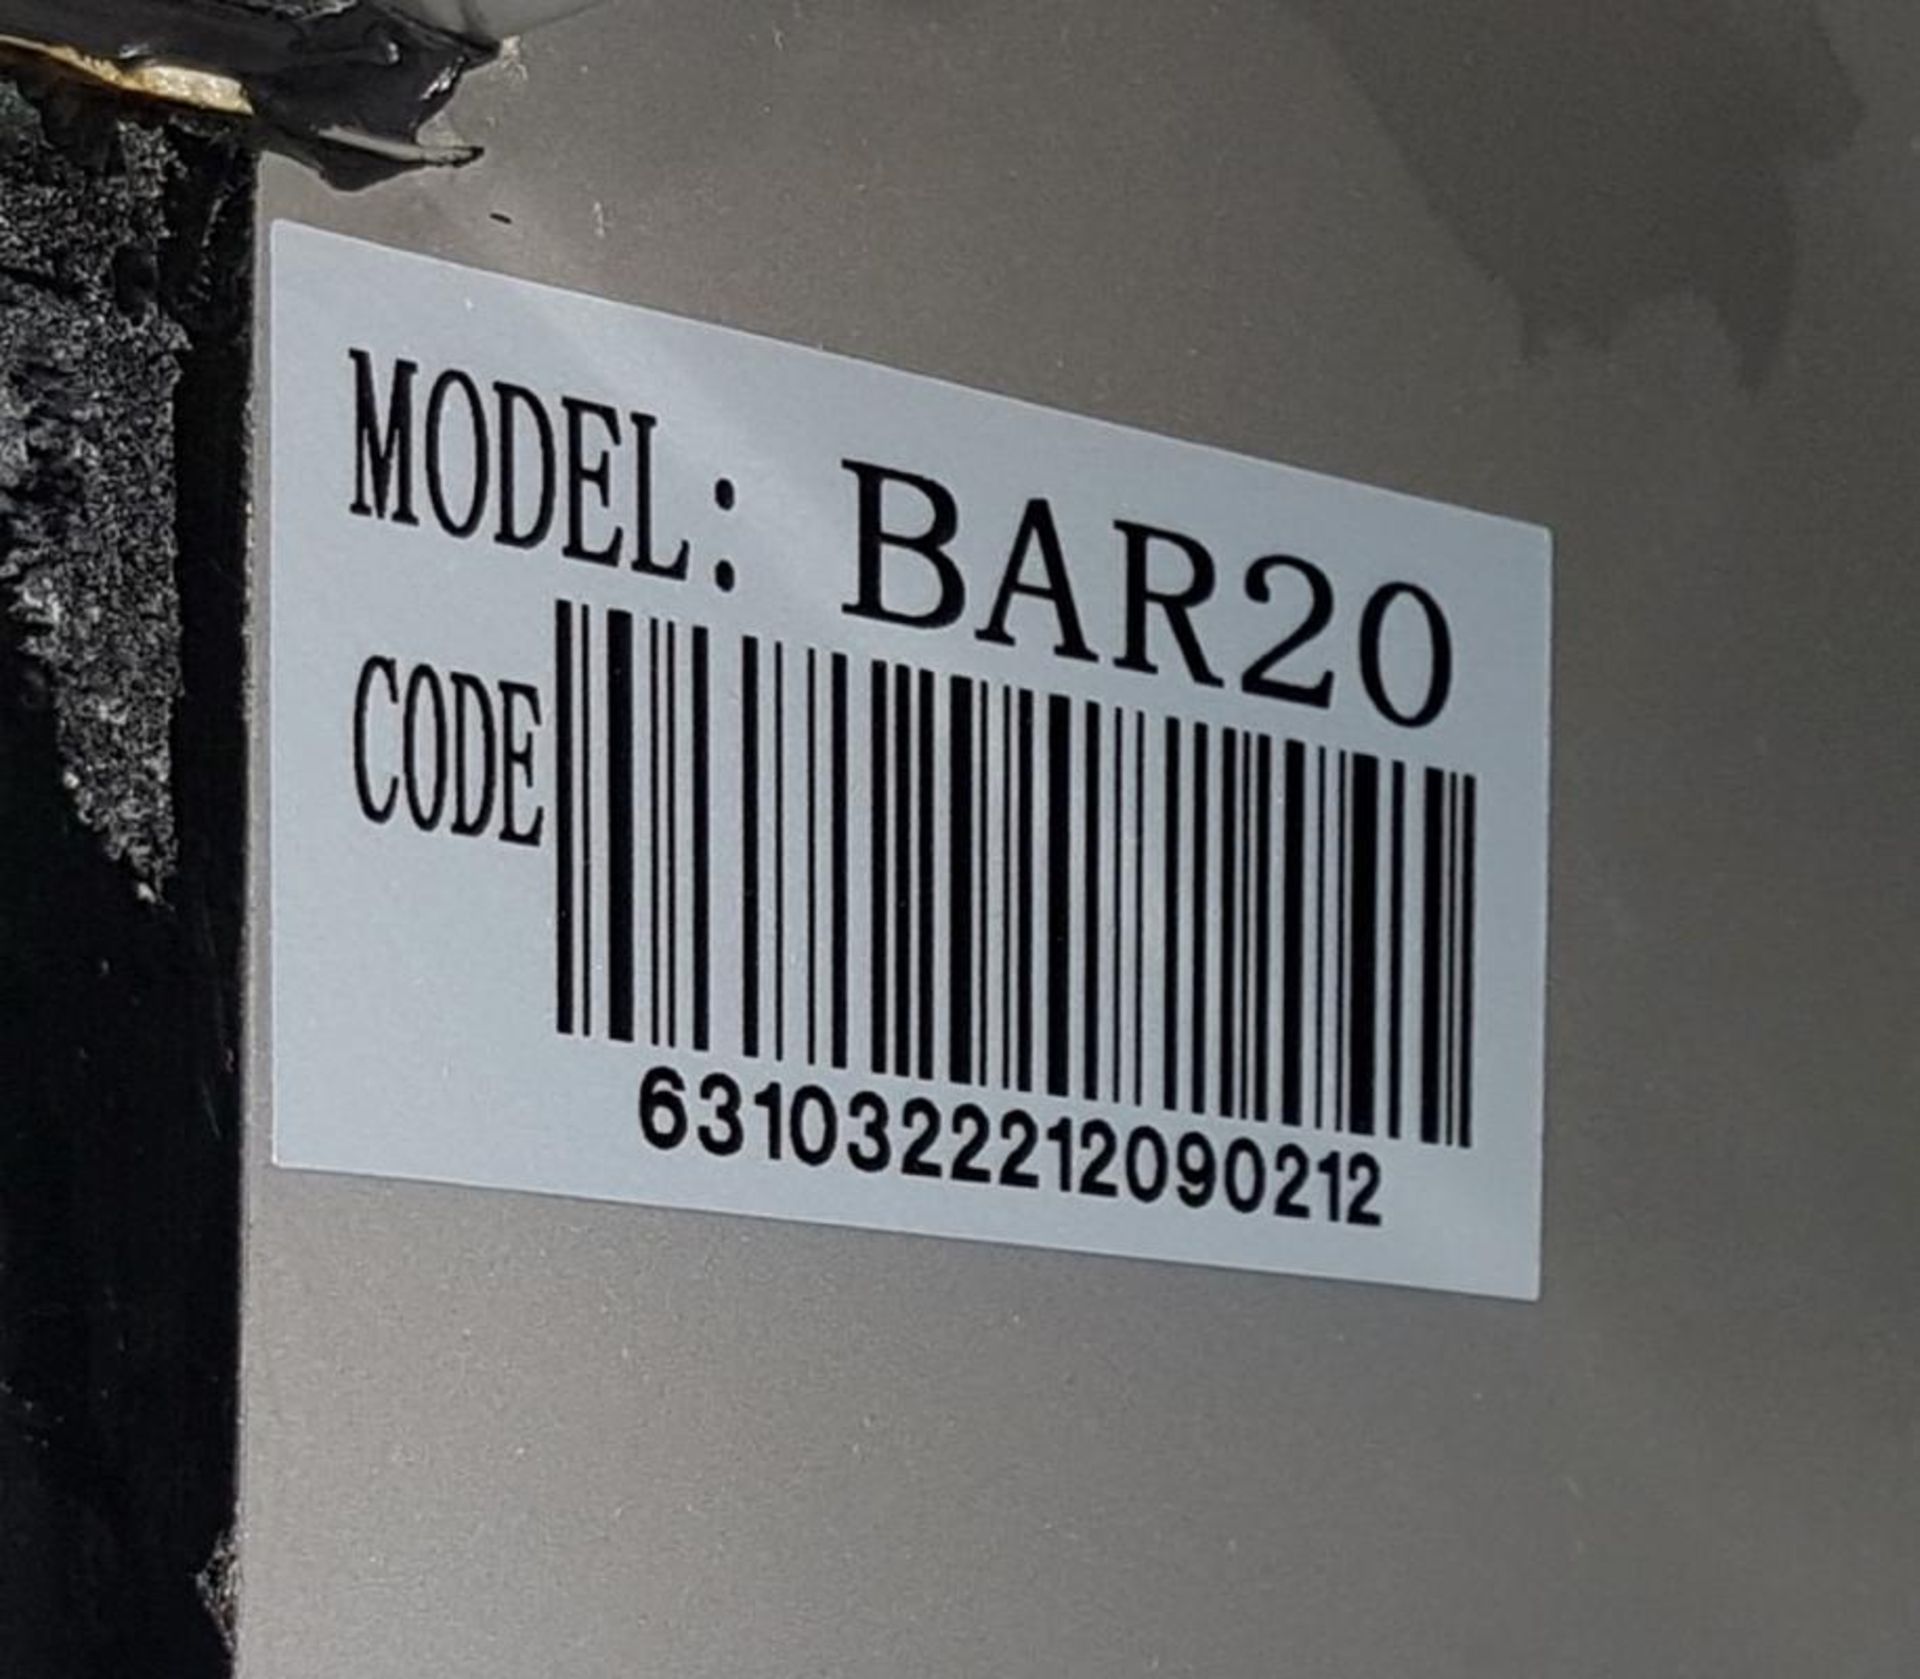 1 x Blizzard BAR20 Back Bar Hinged Door Upright Bottle Cooler - H180 x W90 x D50 cms - CL297 - Ref J - Image 2 of 5